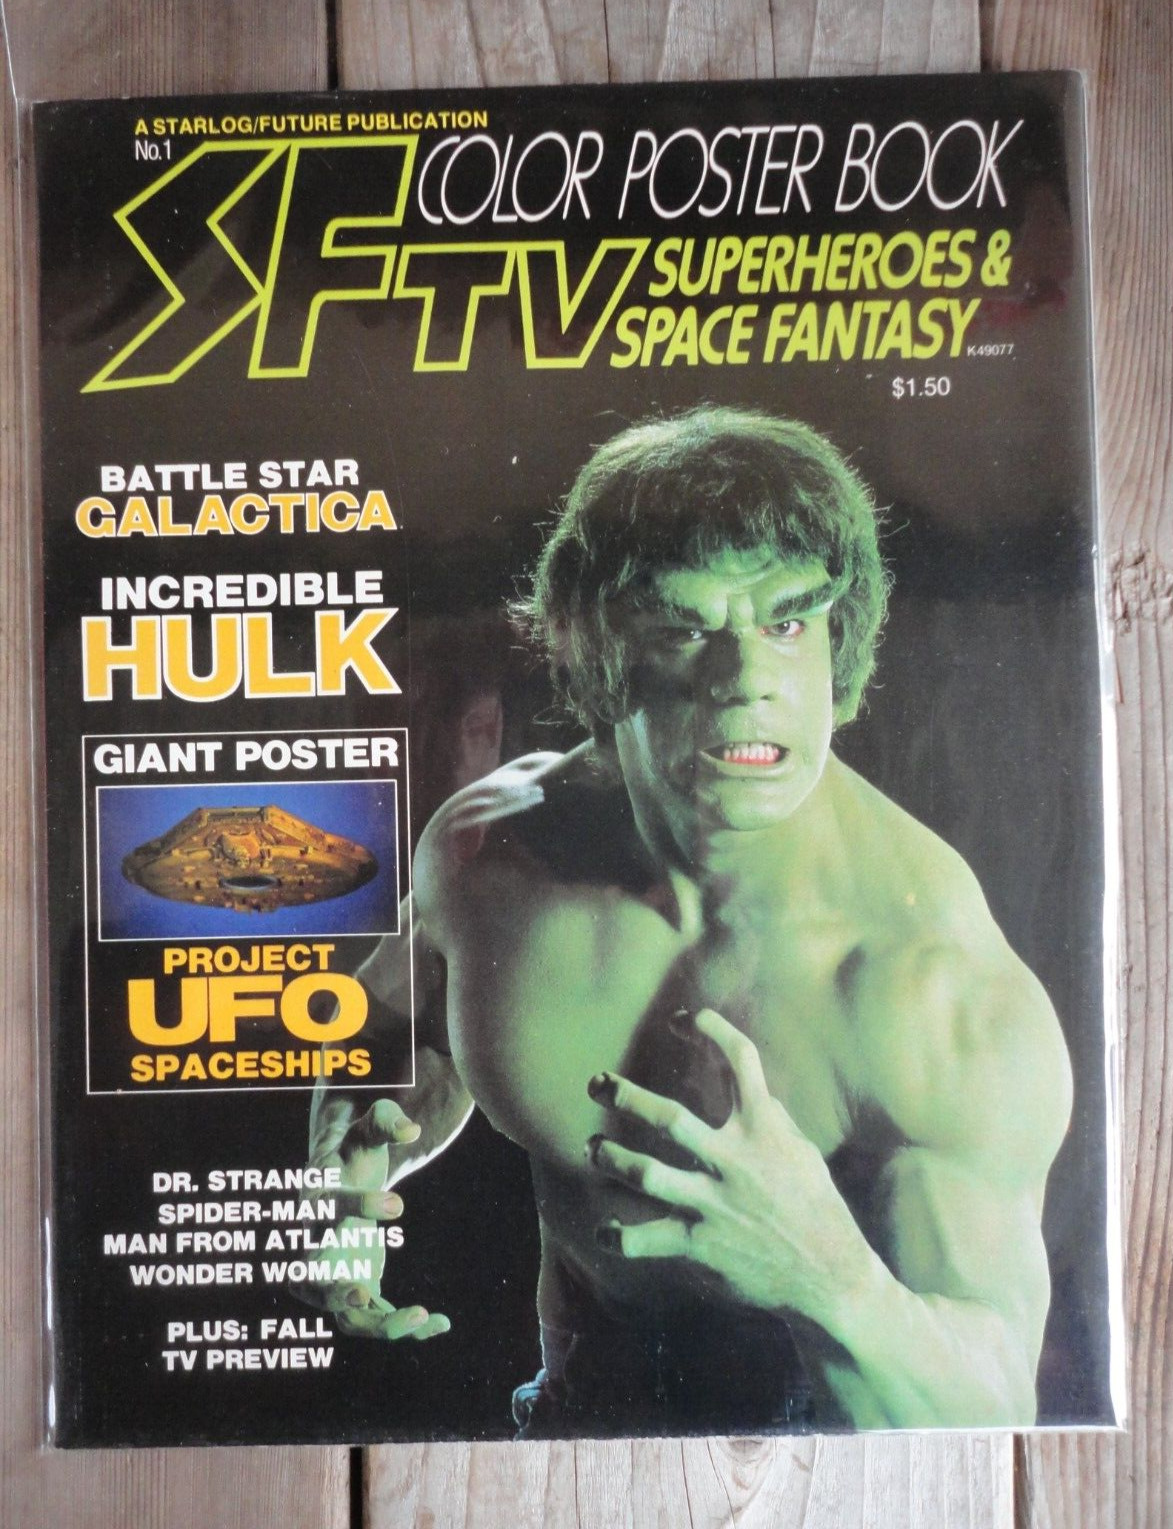 New Old Stock 1978 Starlog #1 SF TV Color Poster Book - Incredible Hulk, 22\